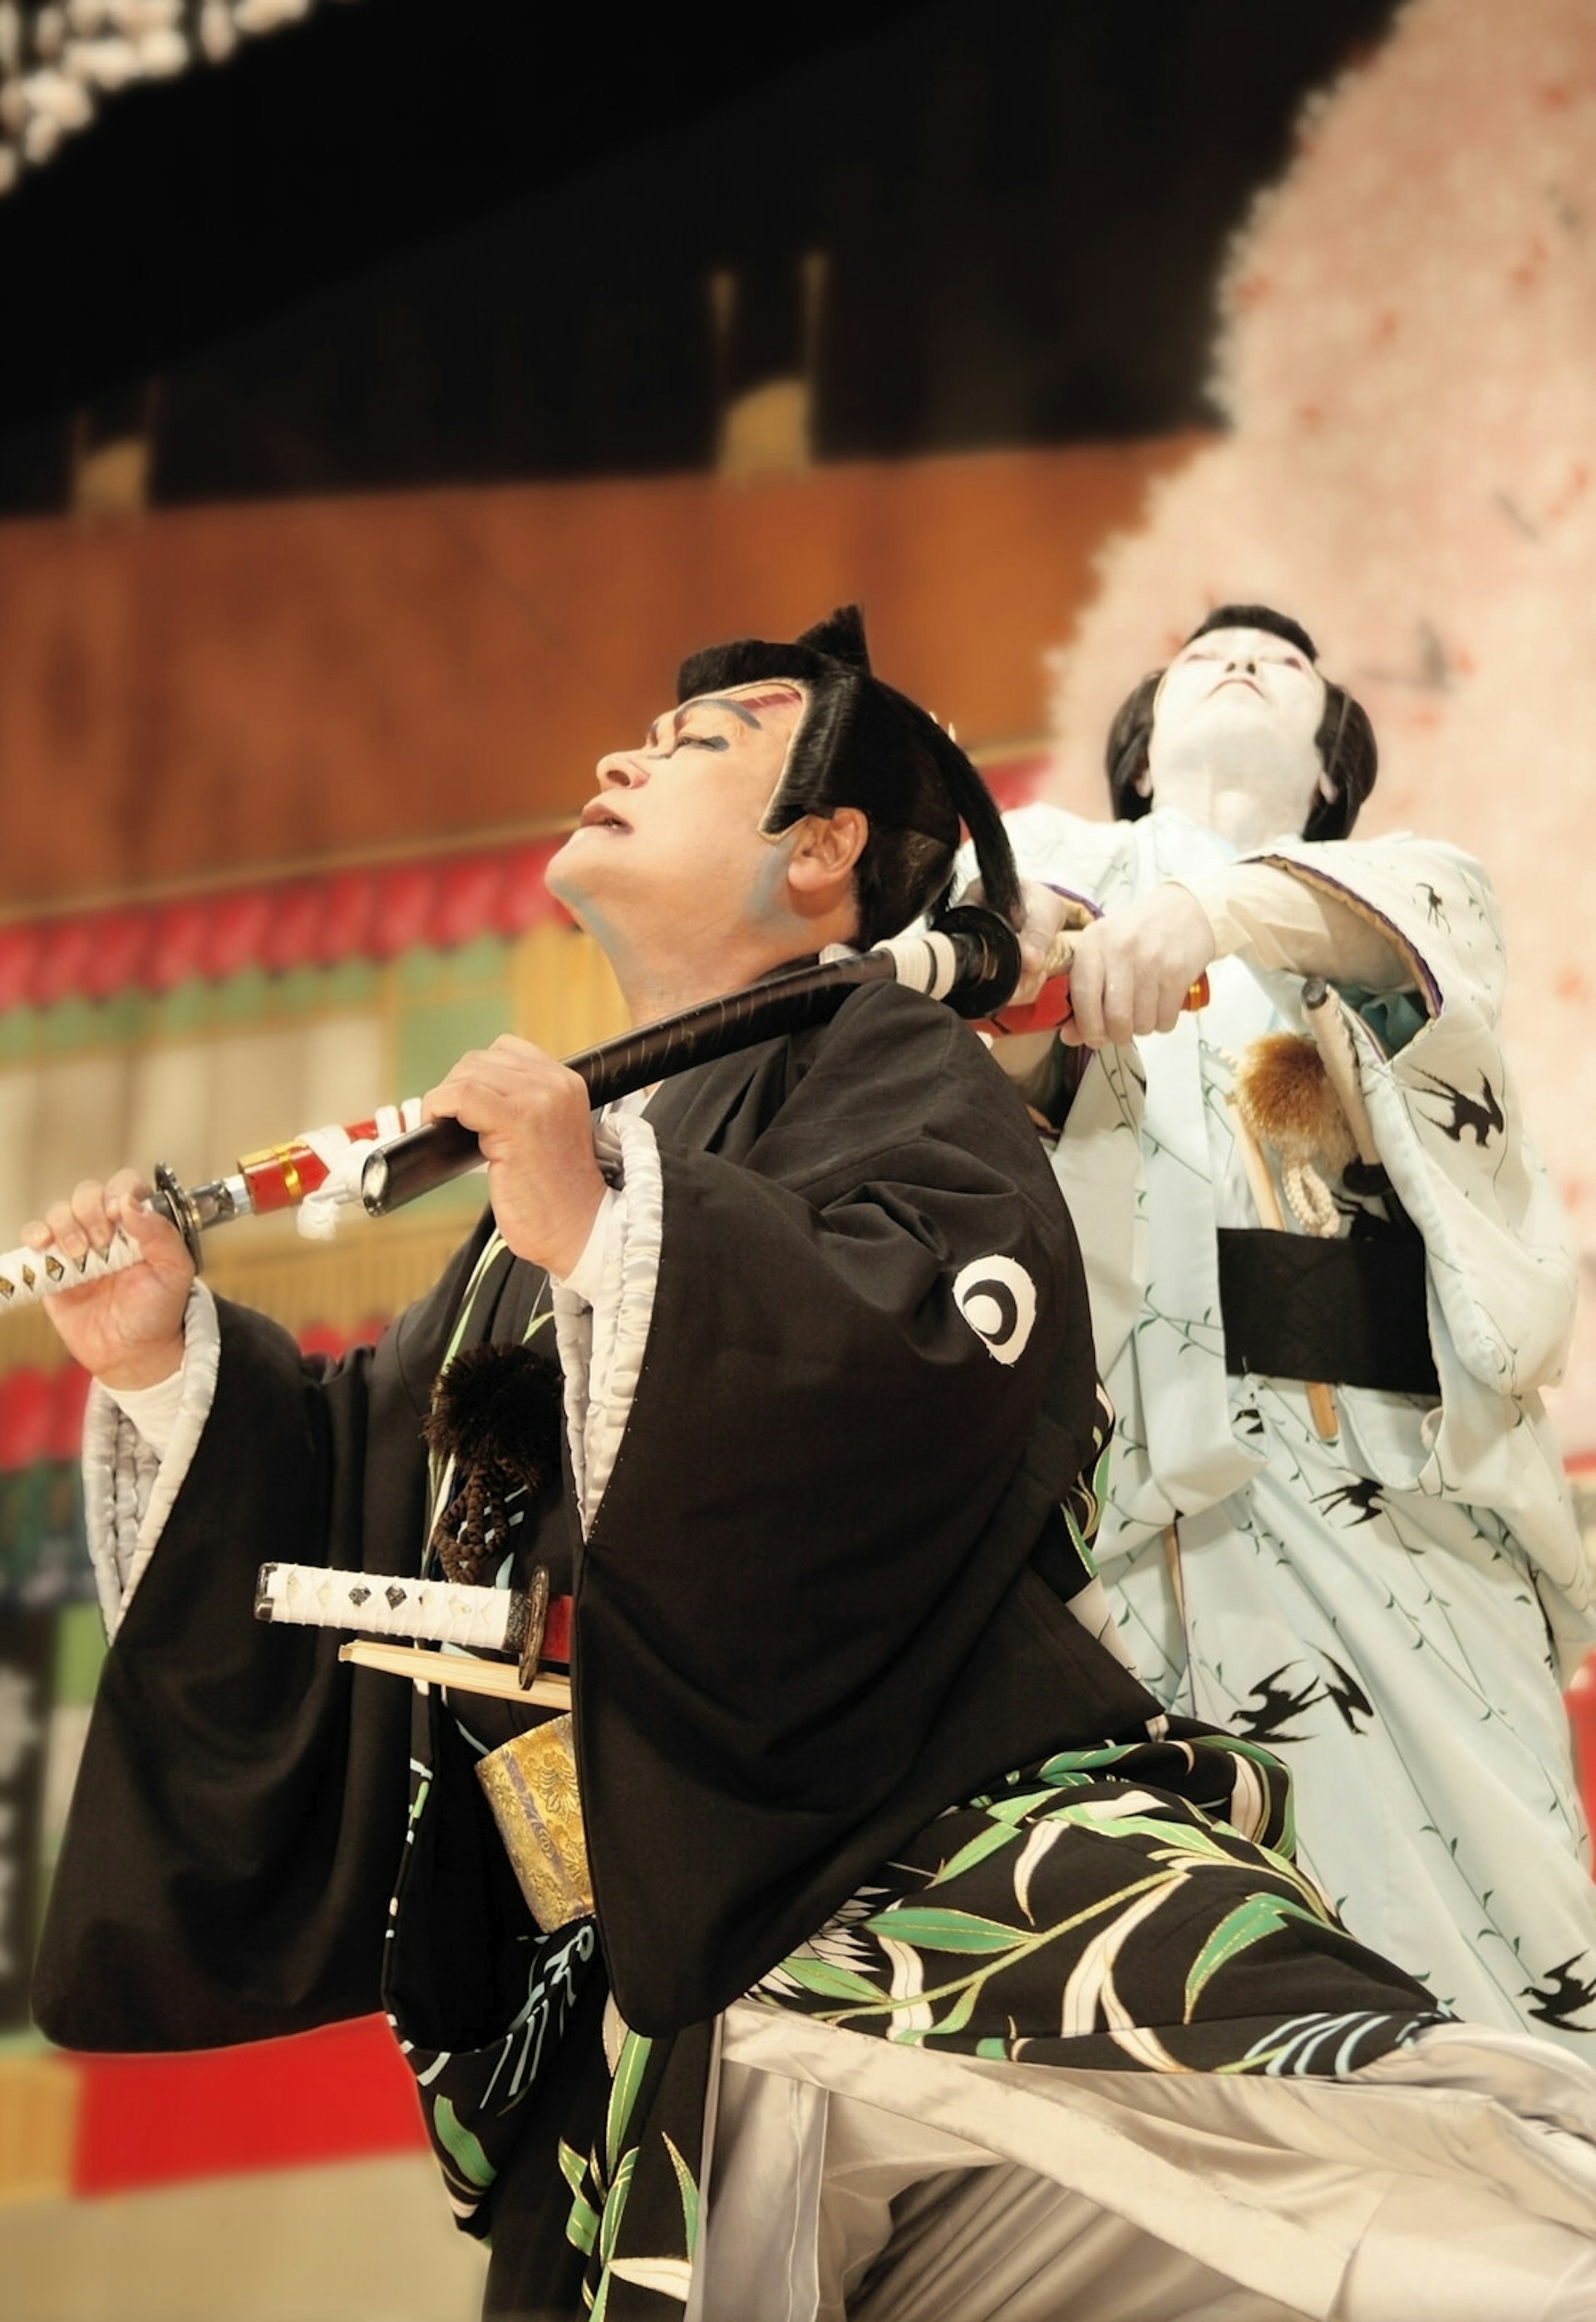 Kabuki actors onstage clash with swords